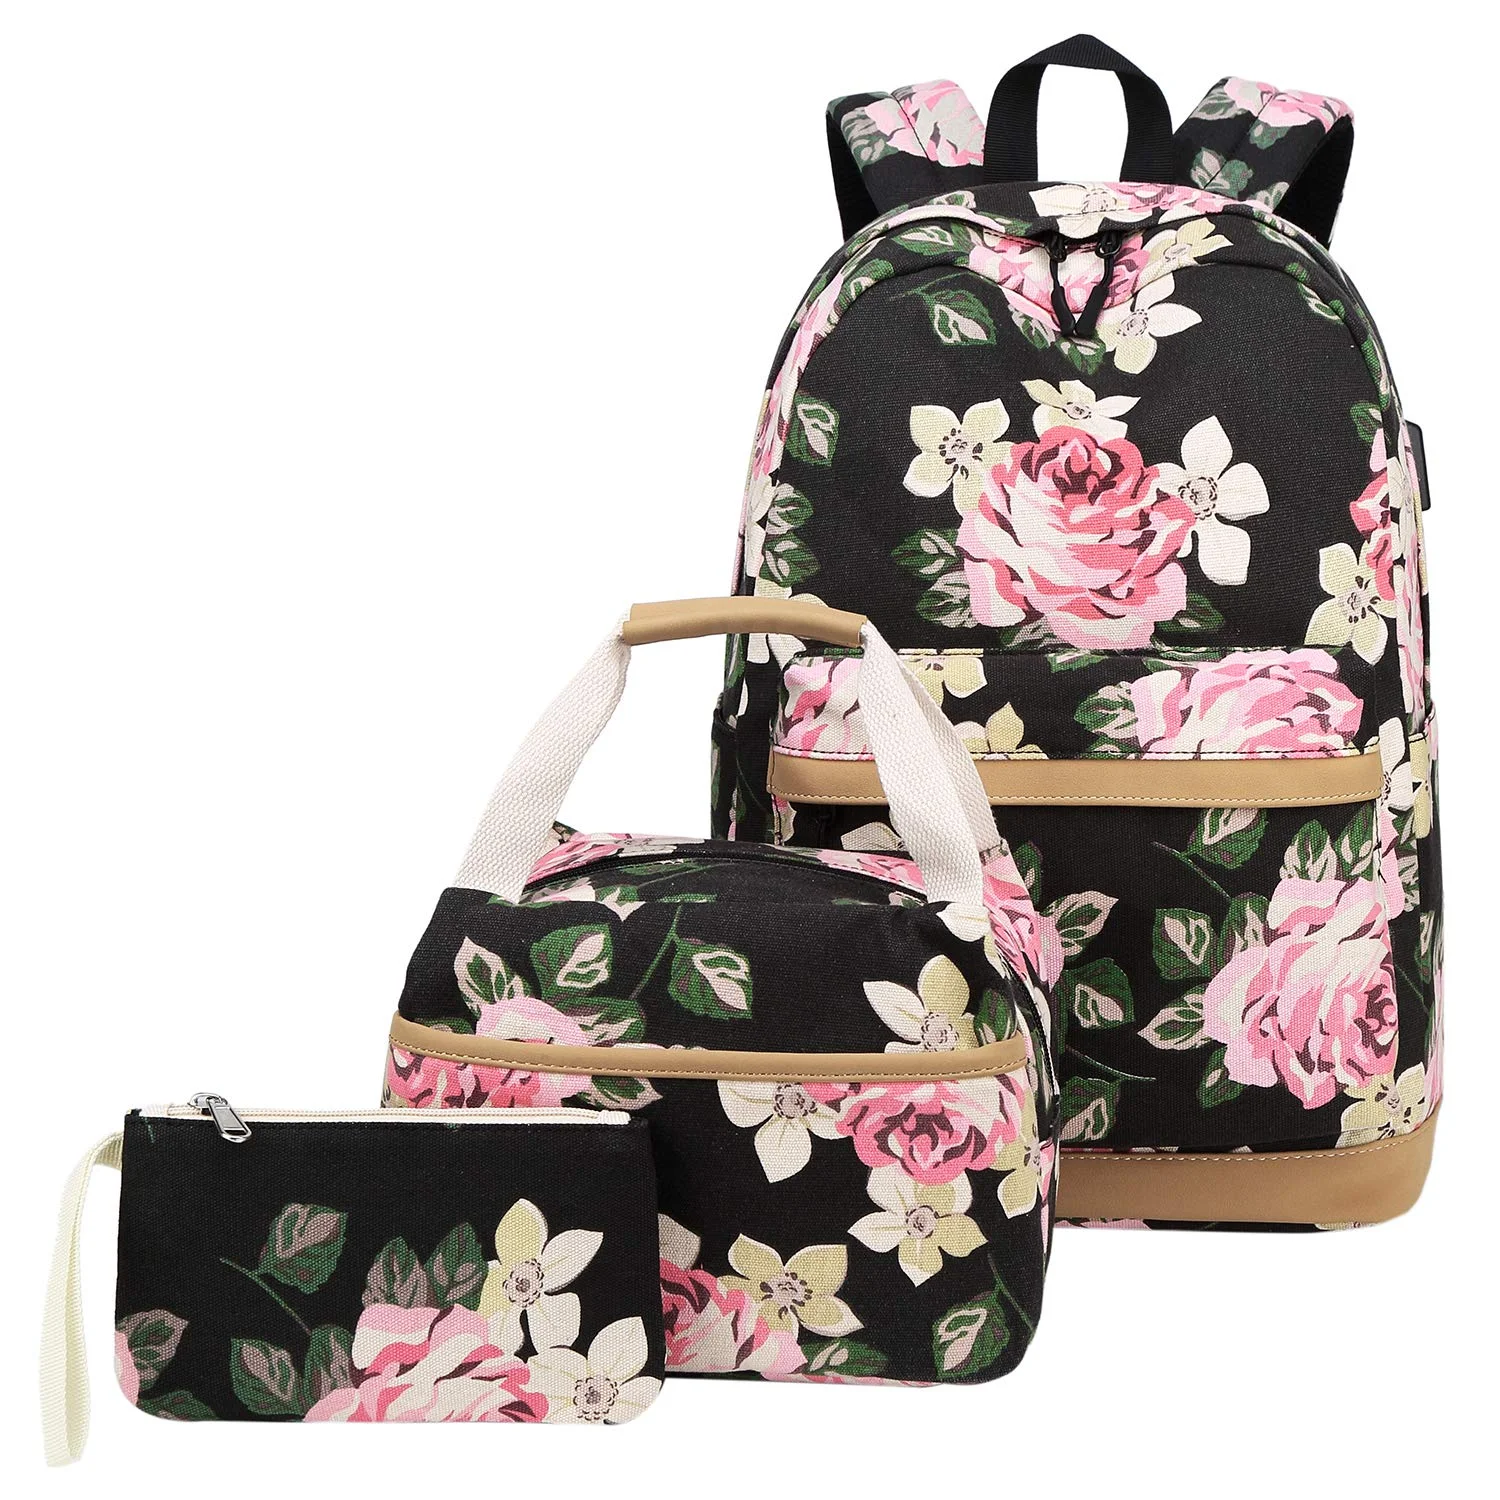 

3 Set Backpack Daypack Laptop Rucksack with USB Port Lunch Bag Pen Bag Lightweight Rucksack for Women Girls Boys, As picture shown, or custom